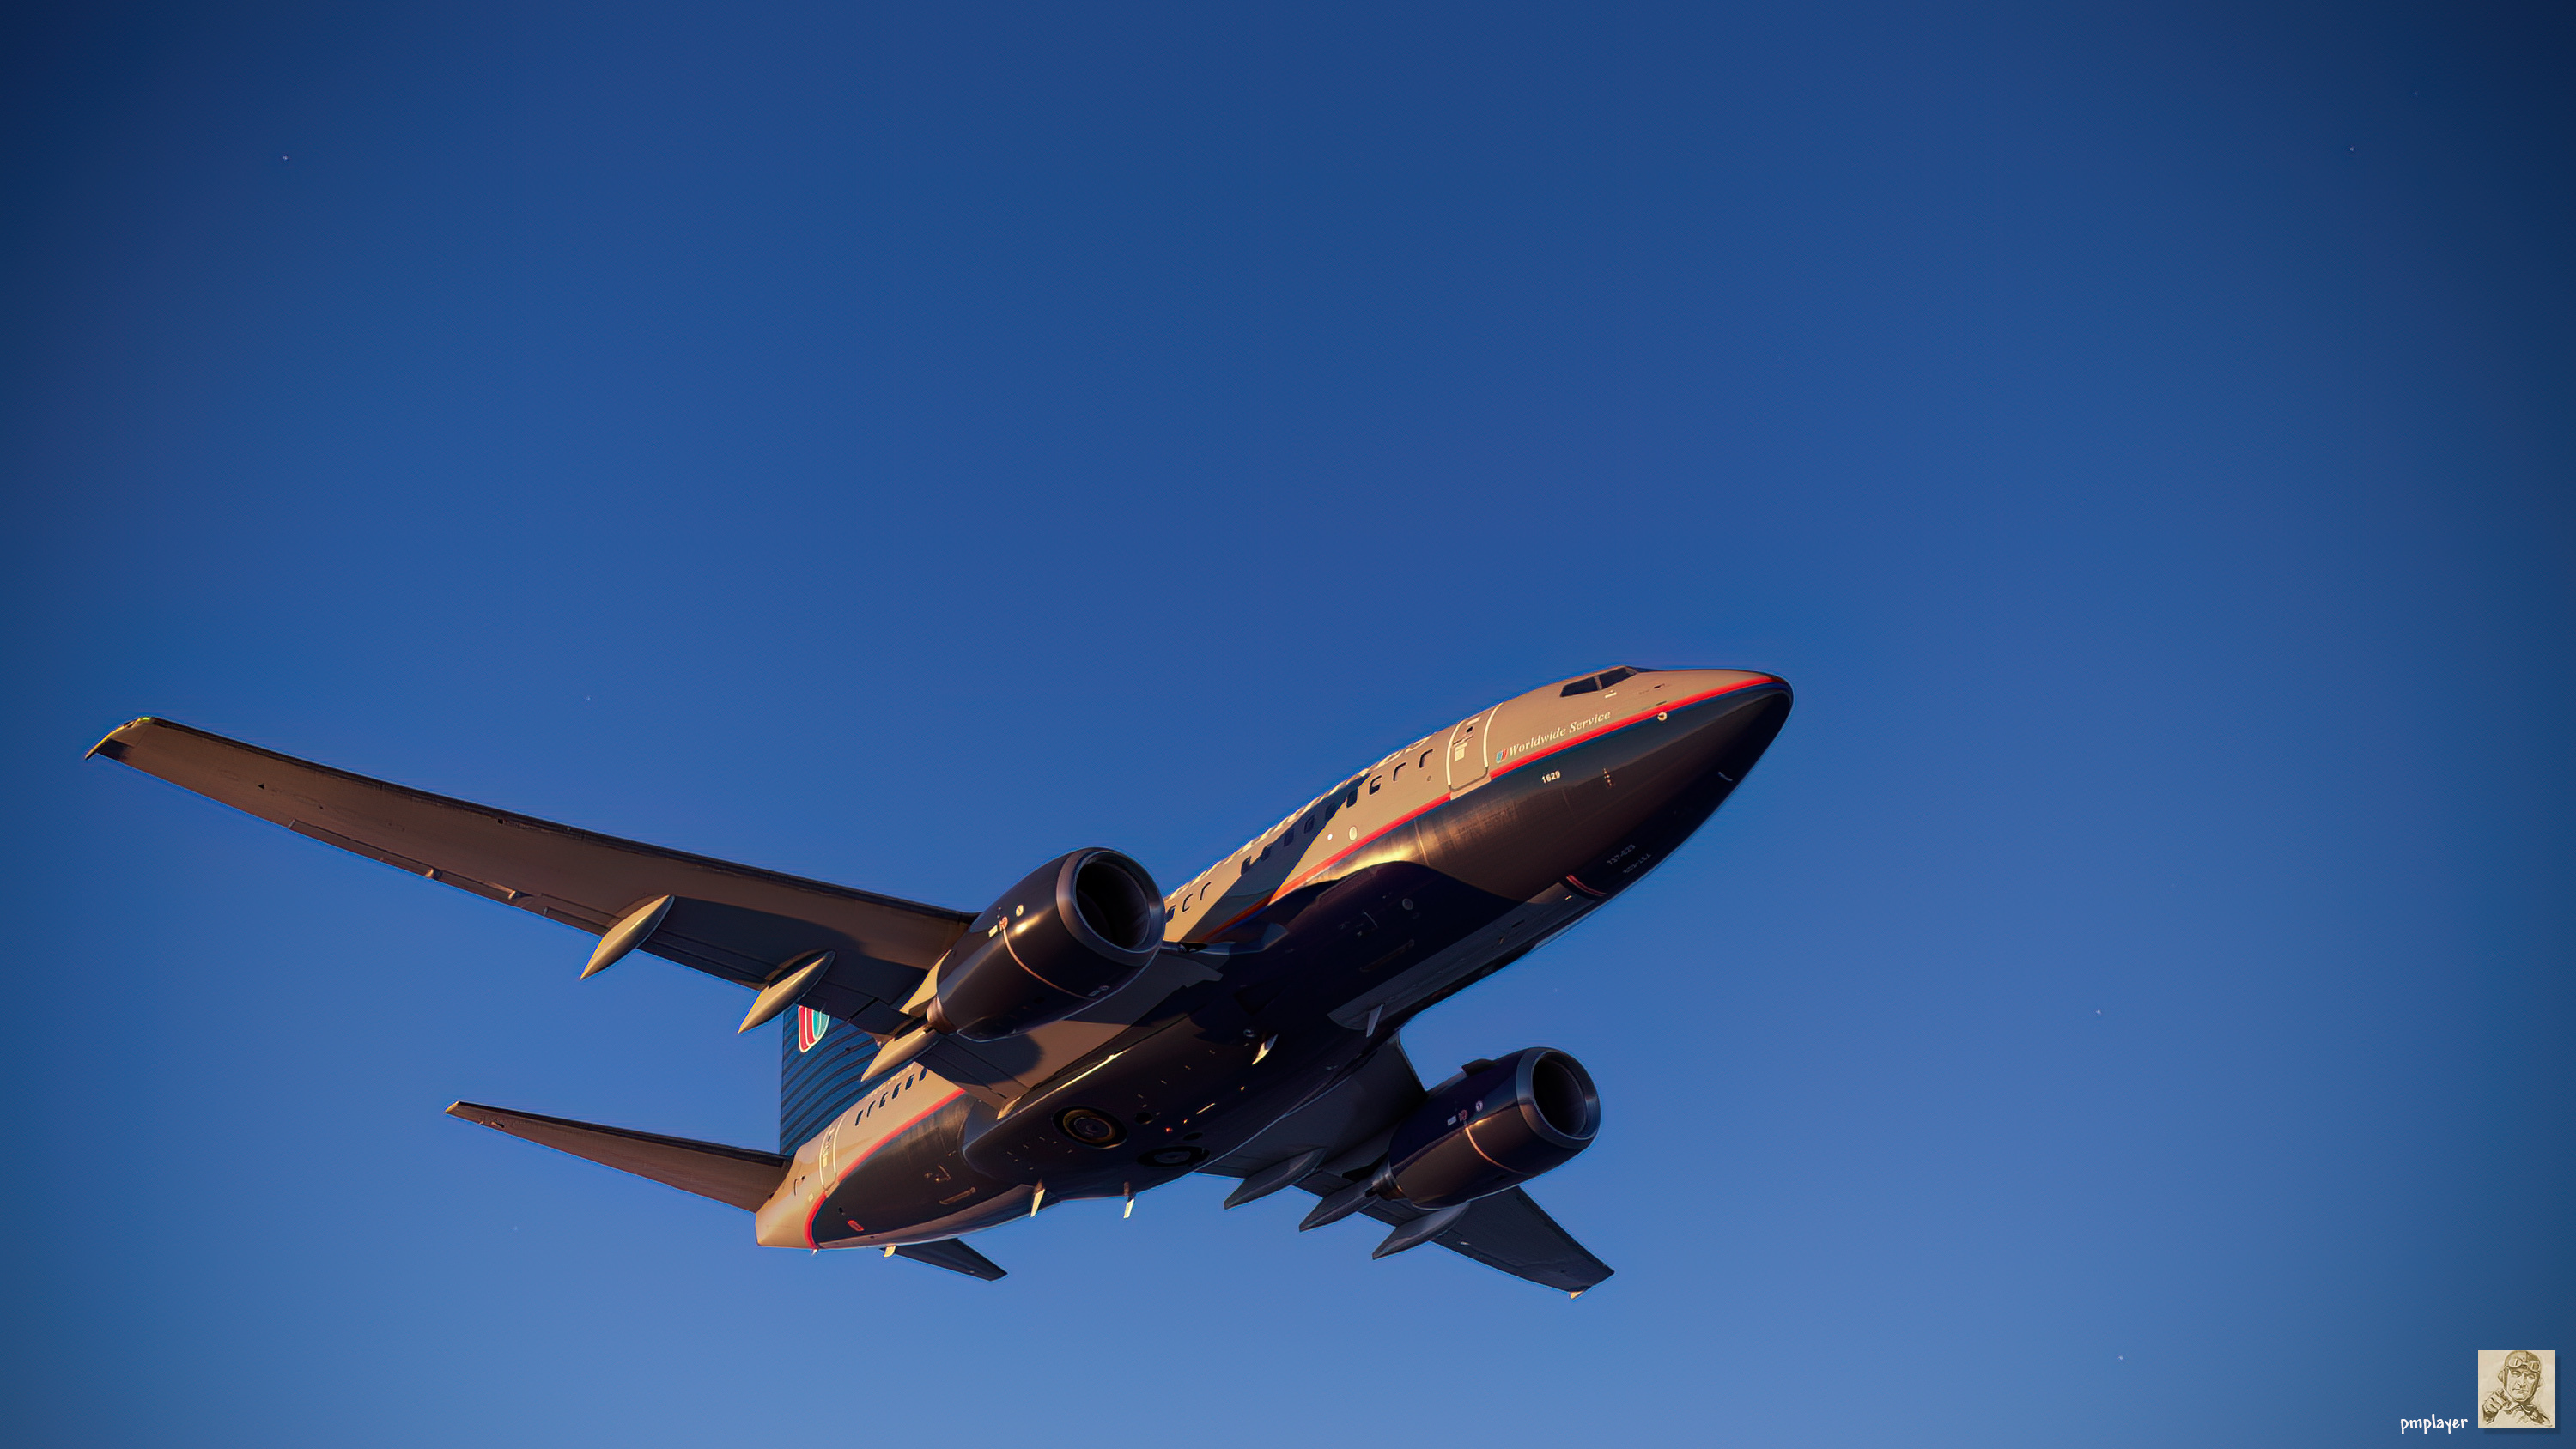 737-700 UA departure from PAUN - The AVSIM Screen Shots Forum - The ...